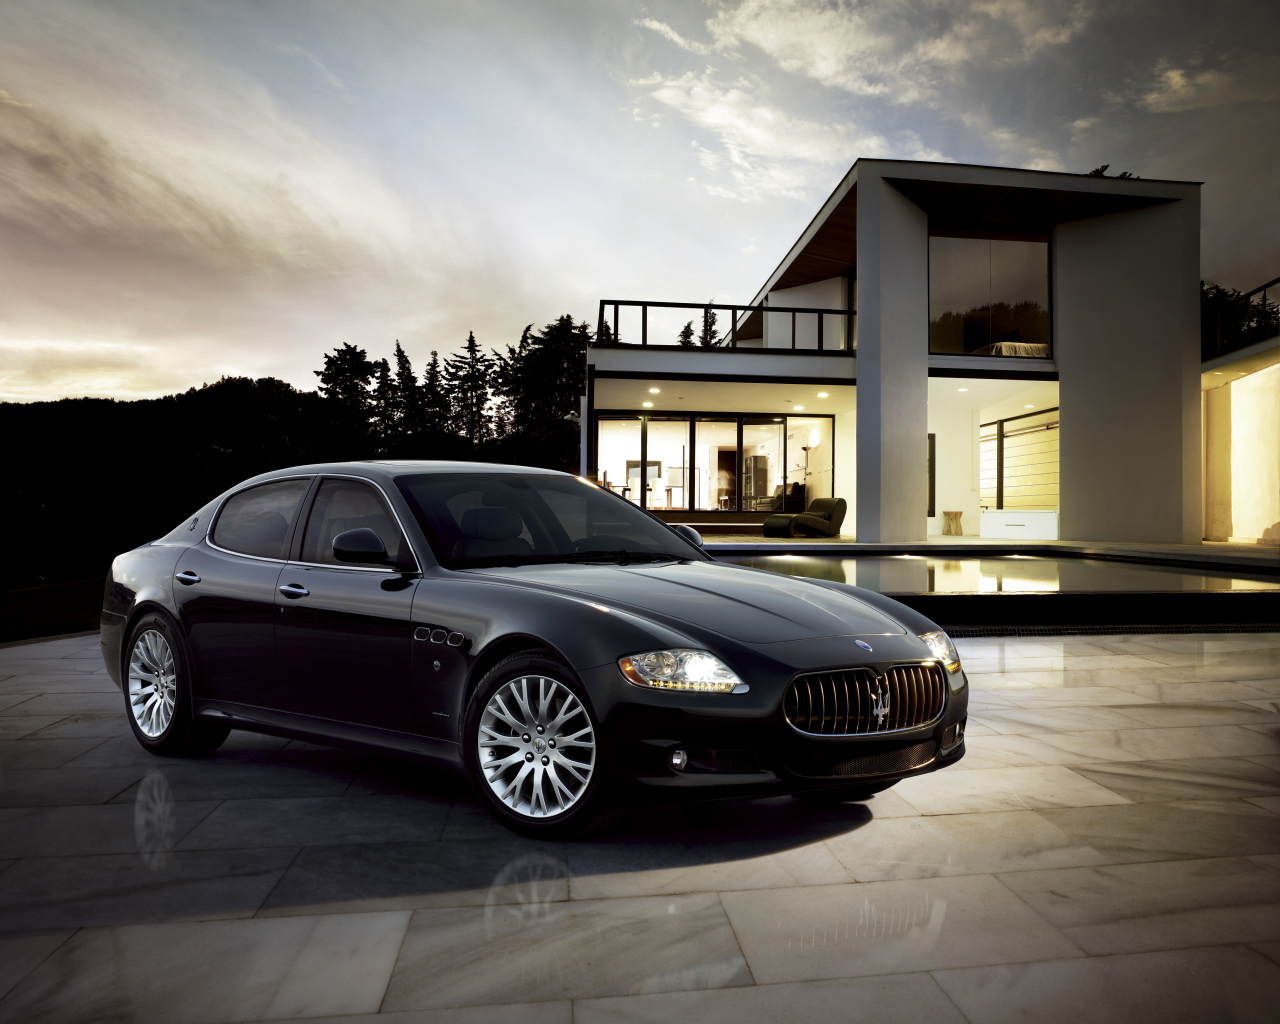 Black car Maserati Quattroporte at the big house